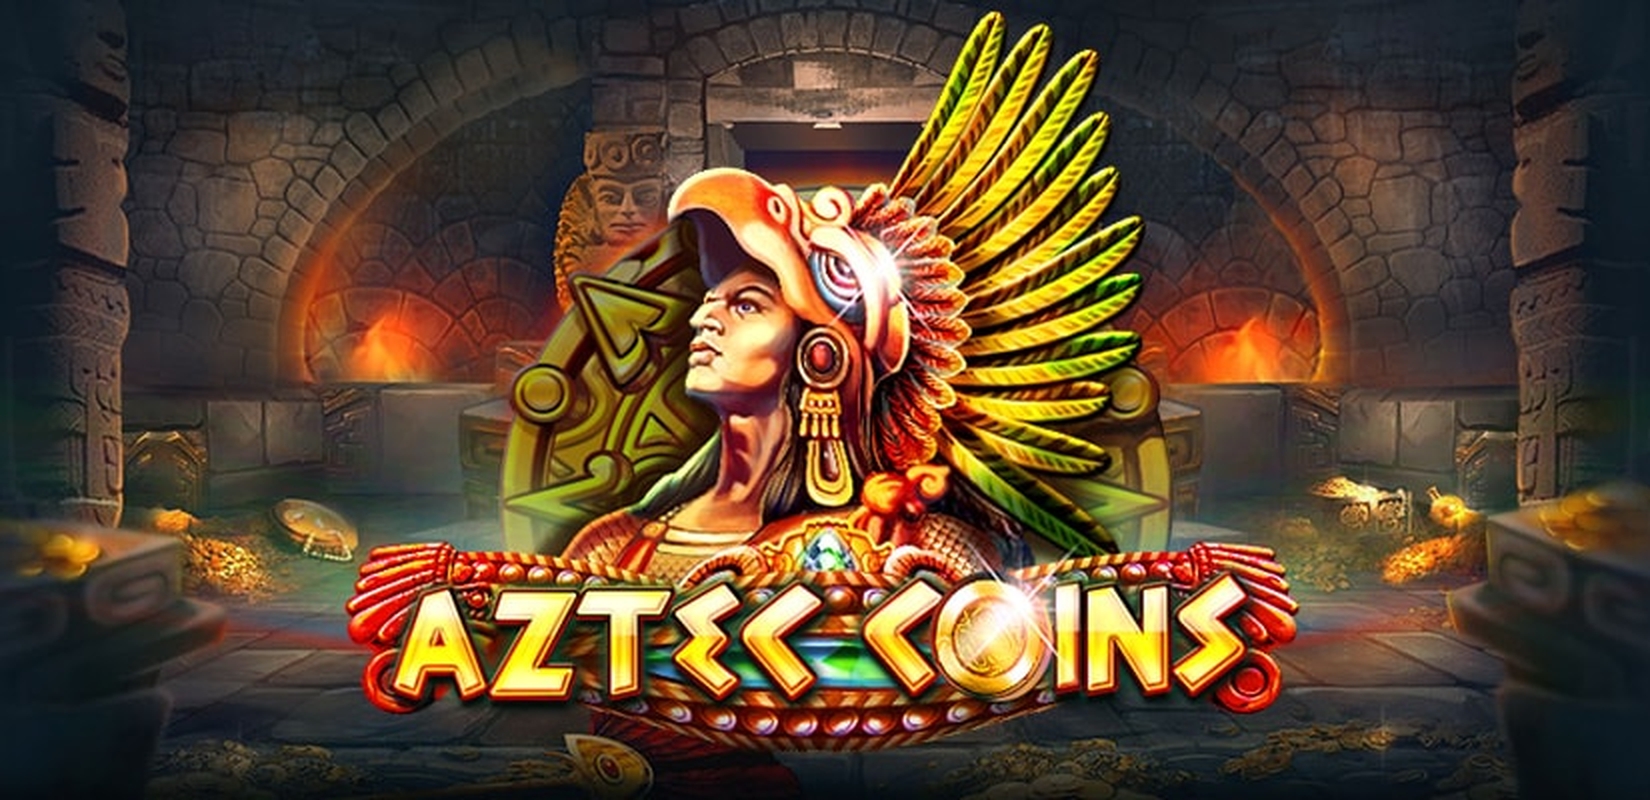 Aztec Coins demo